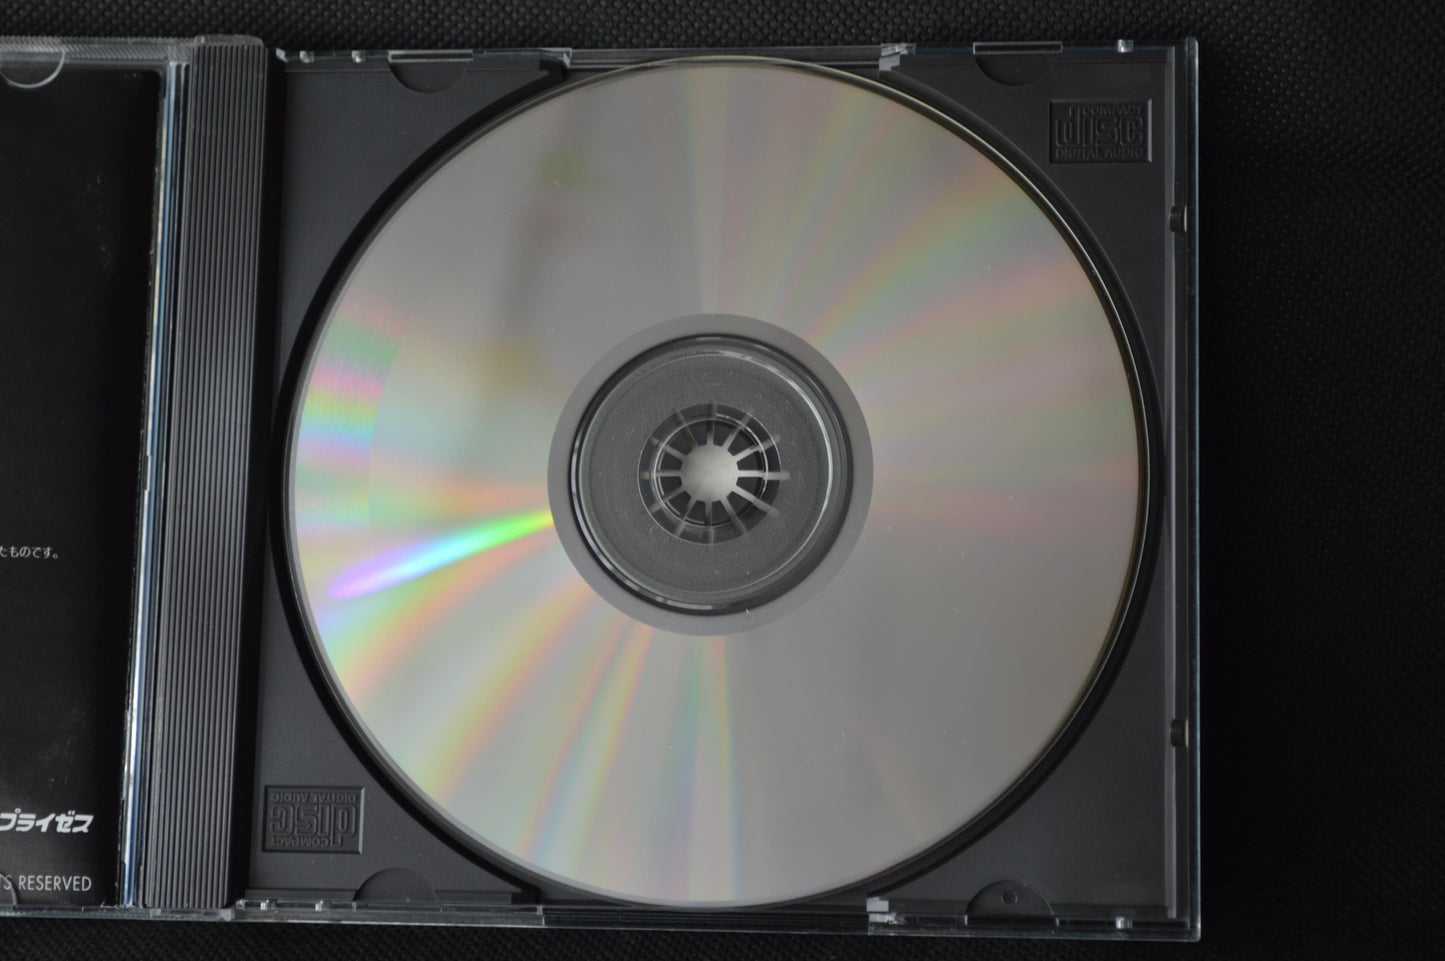 STAR BLADE MEGA CD MCD game Disk, Manual, Box set, Working -f1114-